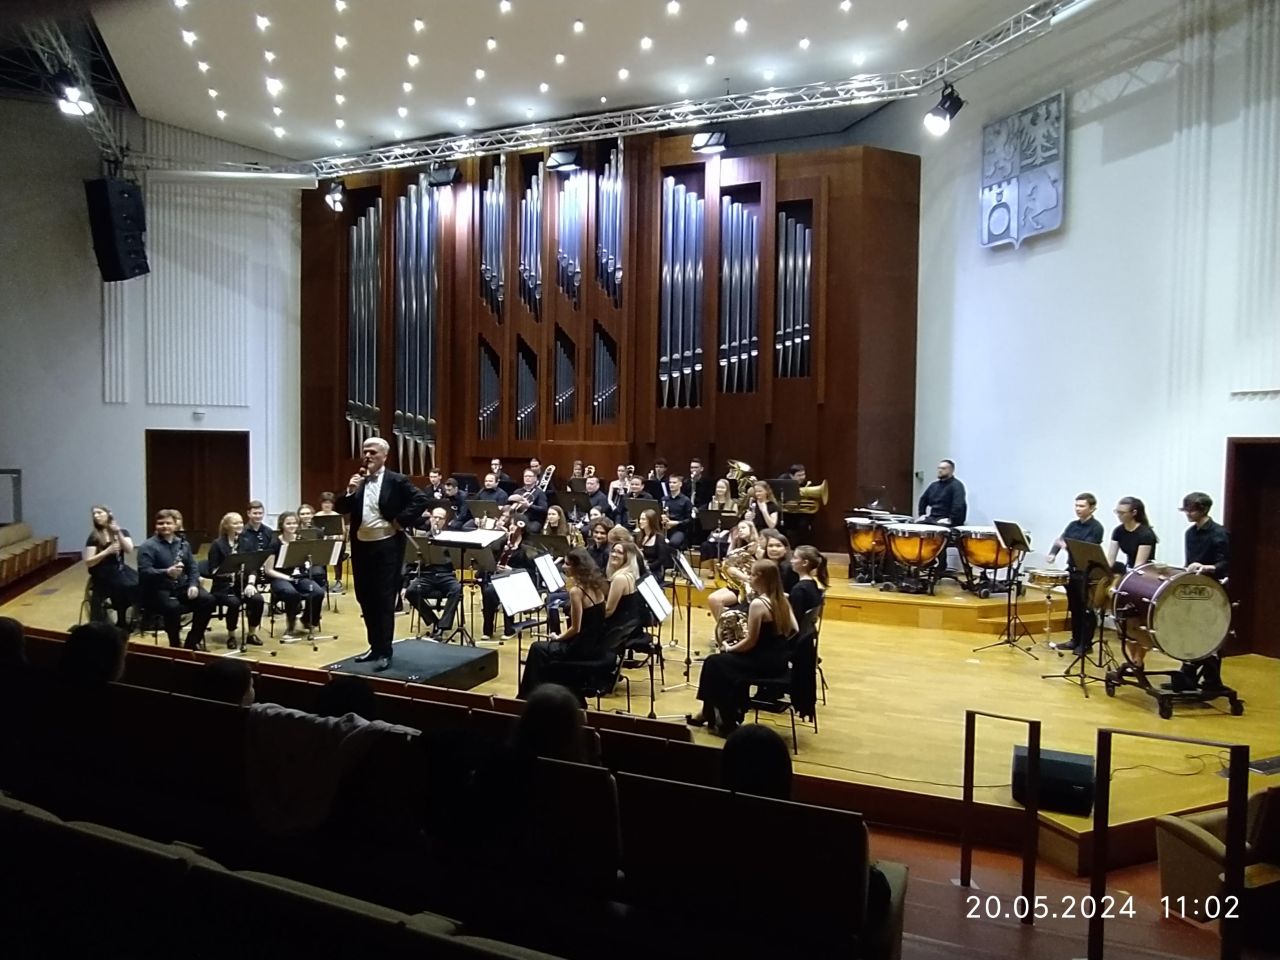 5.A Výchovný koncert k Roku české hudby